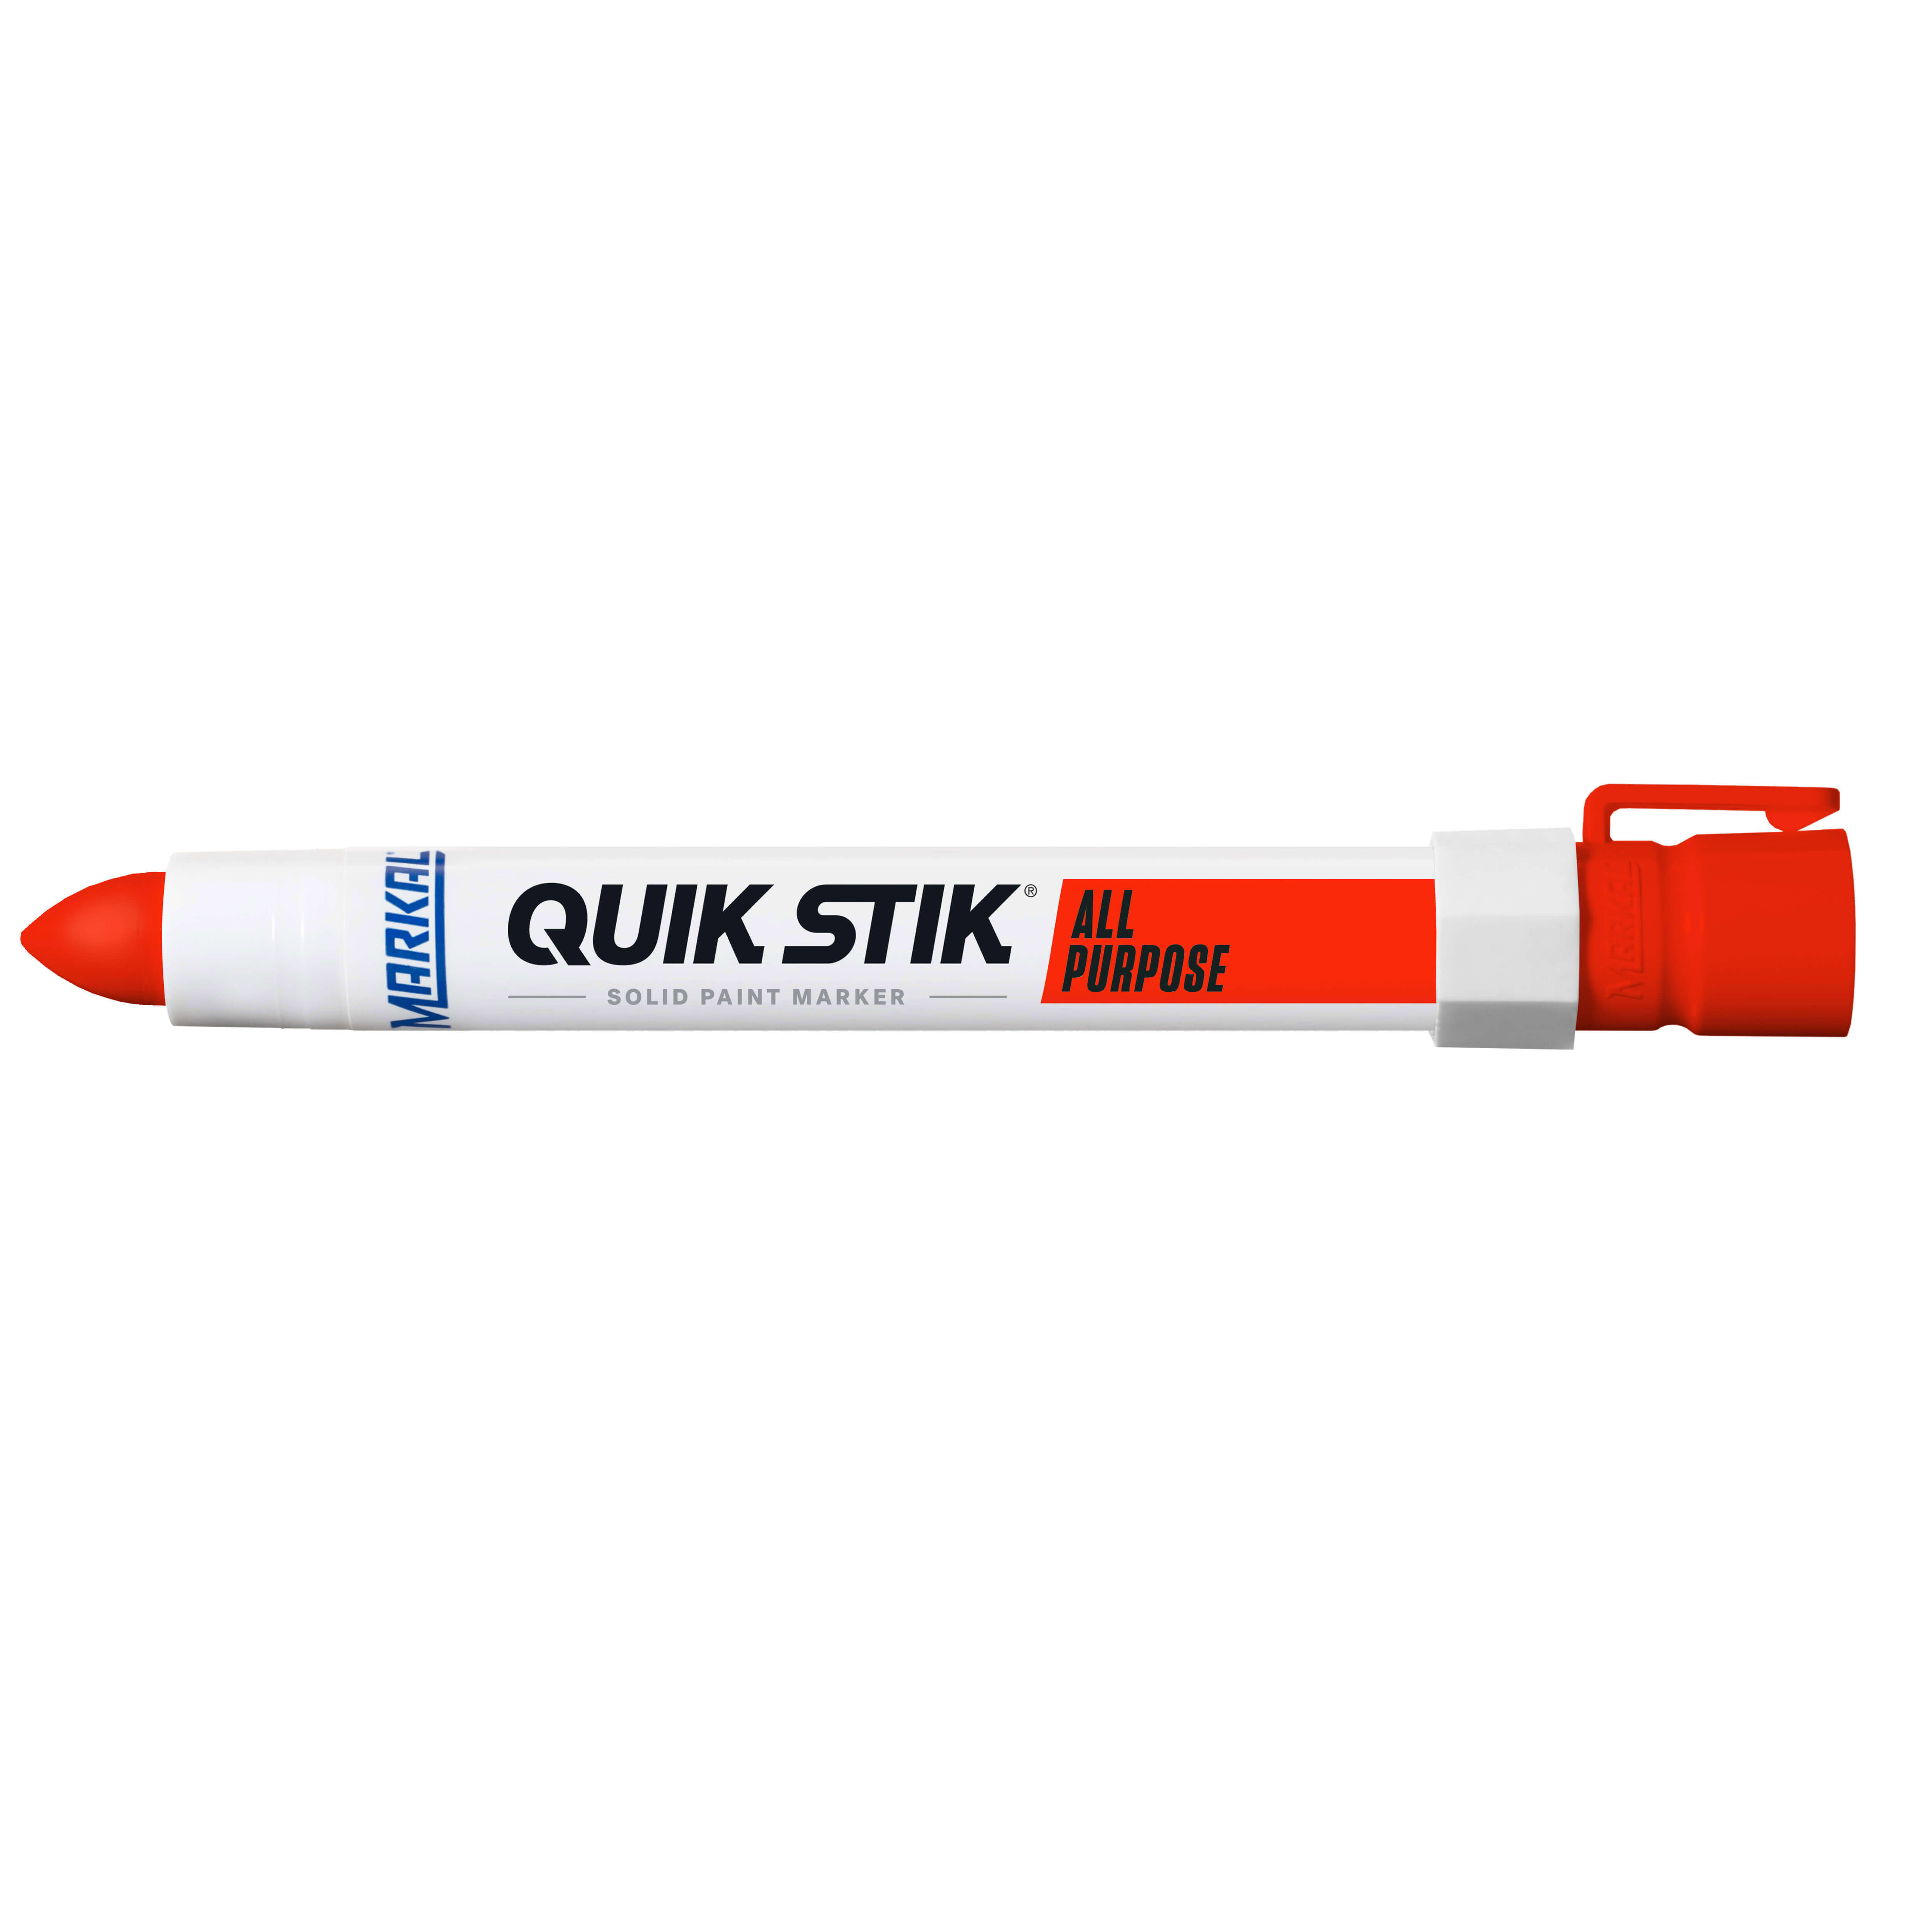 Quik Stik All Purpose – Farbmarker, rot